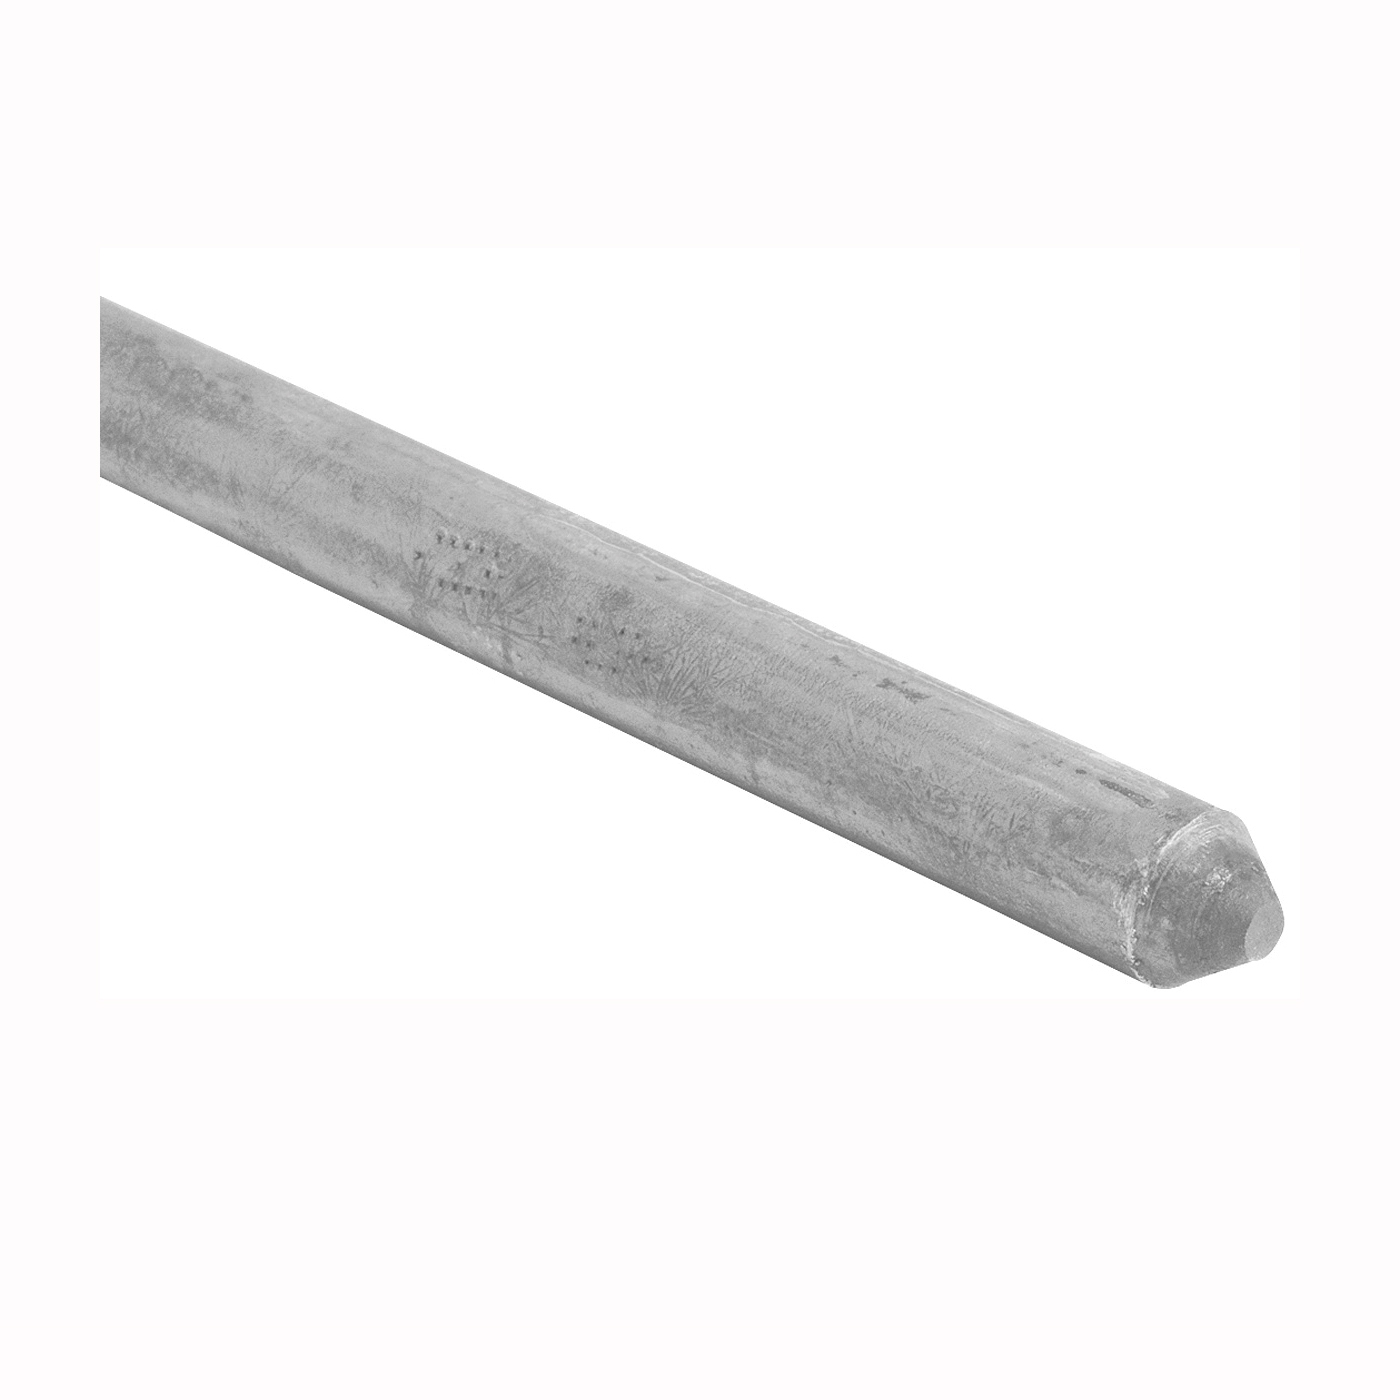 815860UPC Grounding Rod, 5/8 in Dia Nominal, 6 ft L, Steel, Galvanized